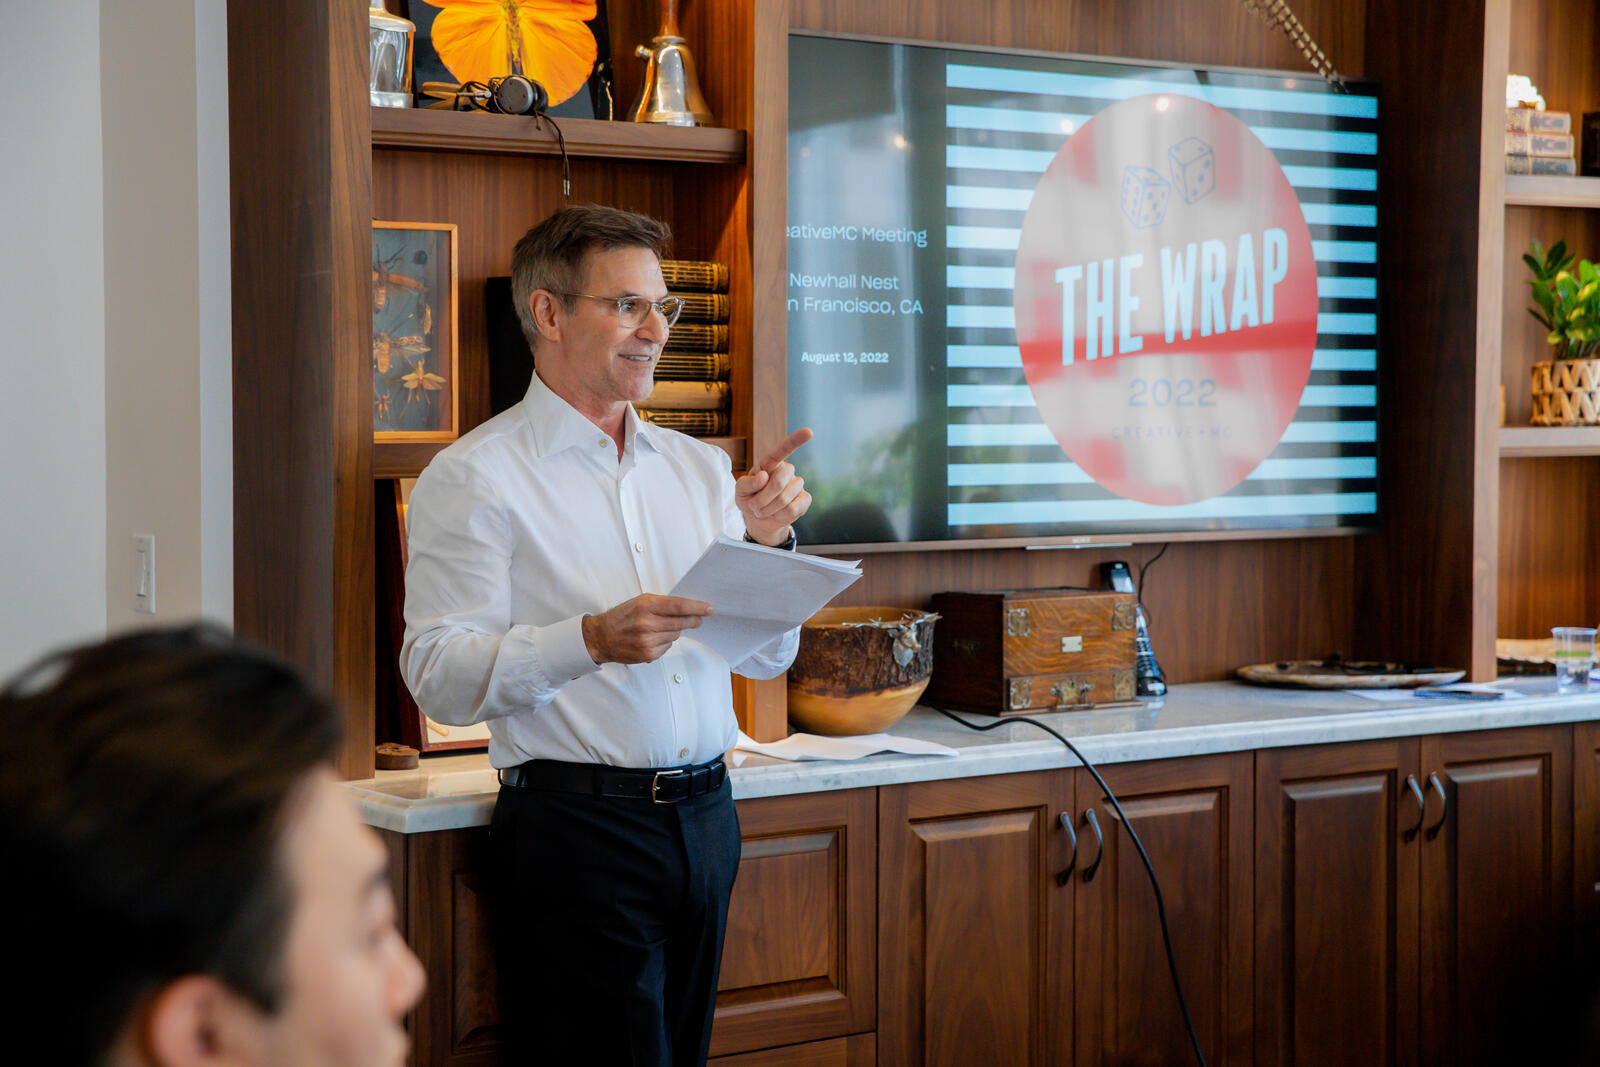 CEO Mick Hawk addresses staff at <em>The Wrap event</em>